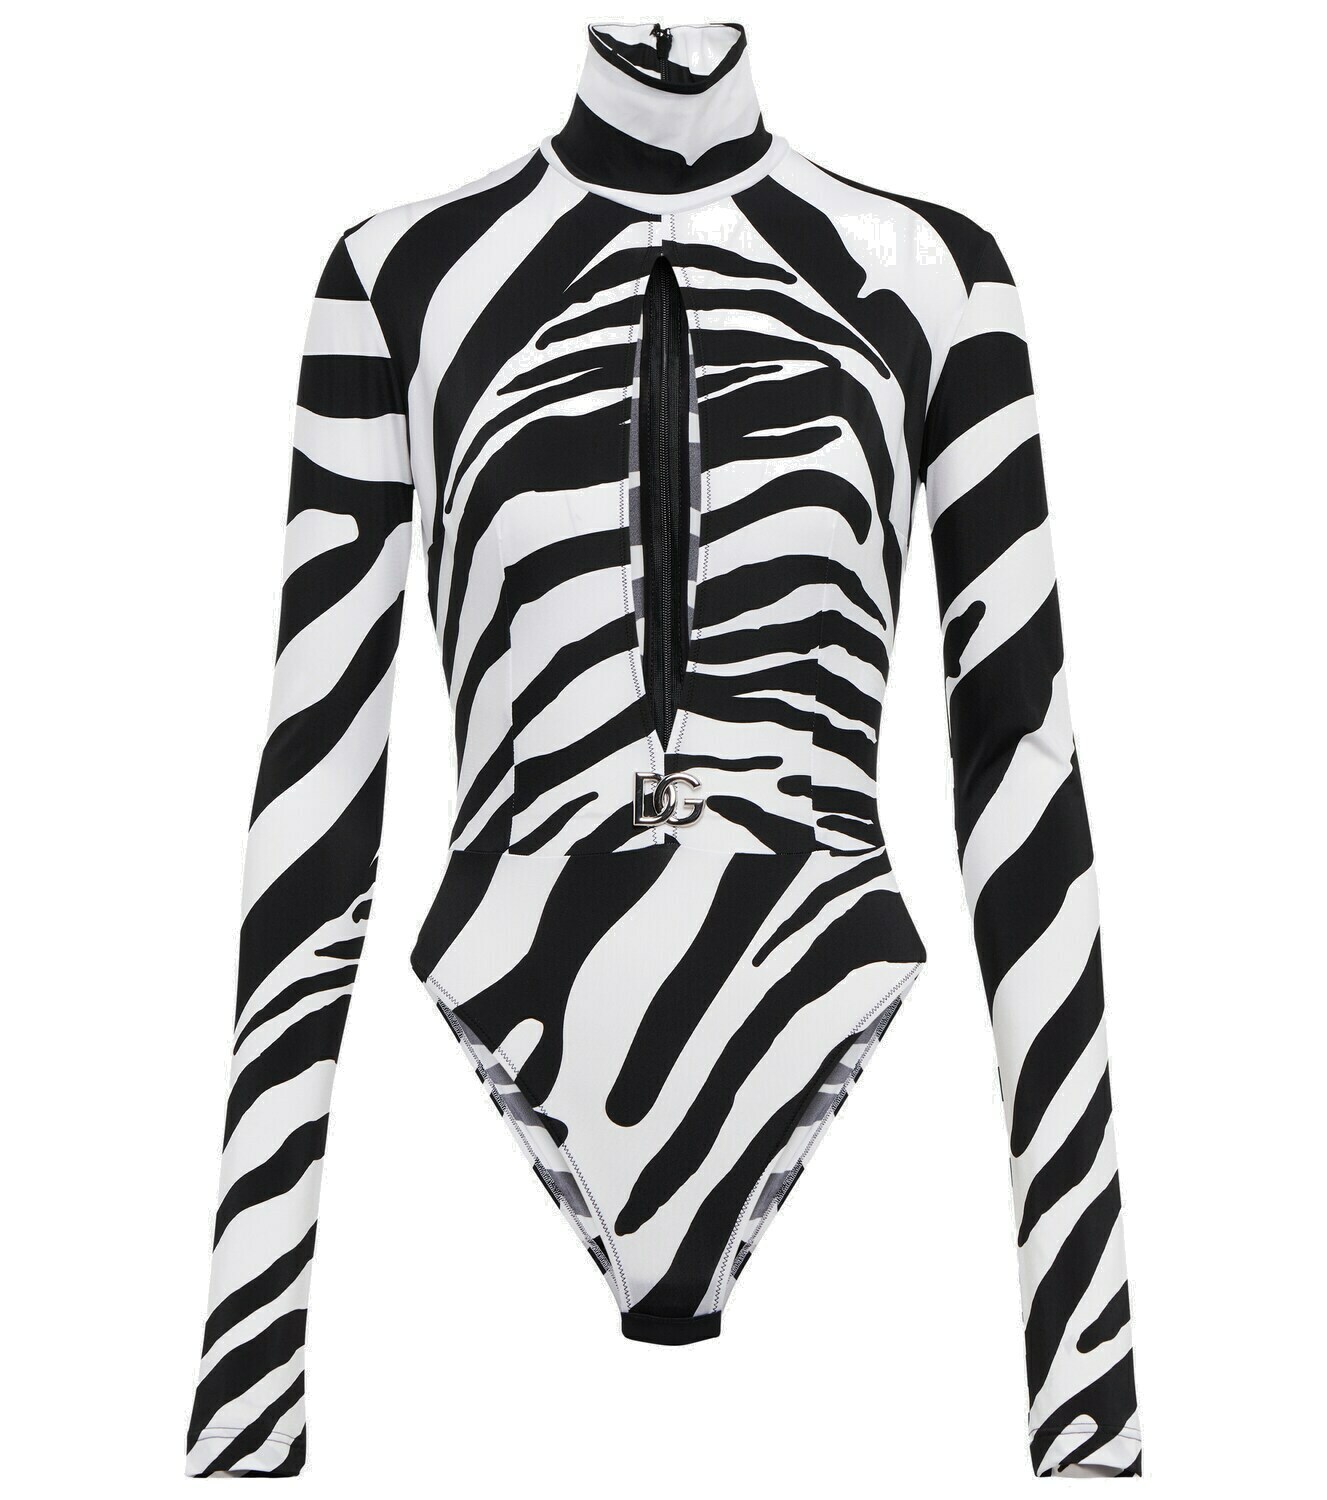 Dolce&Gabbana - Zebra print bodysuit Dolce & Gabbana